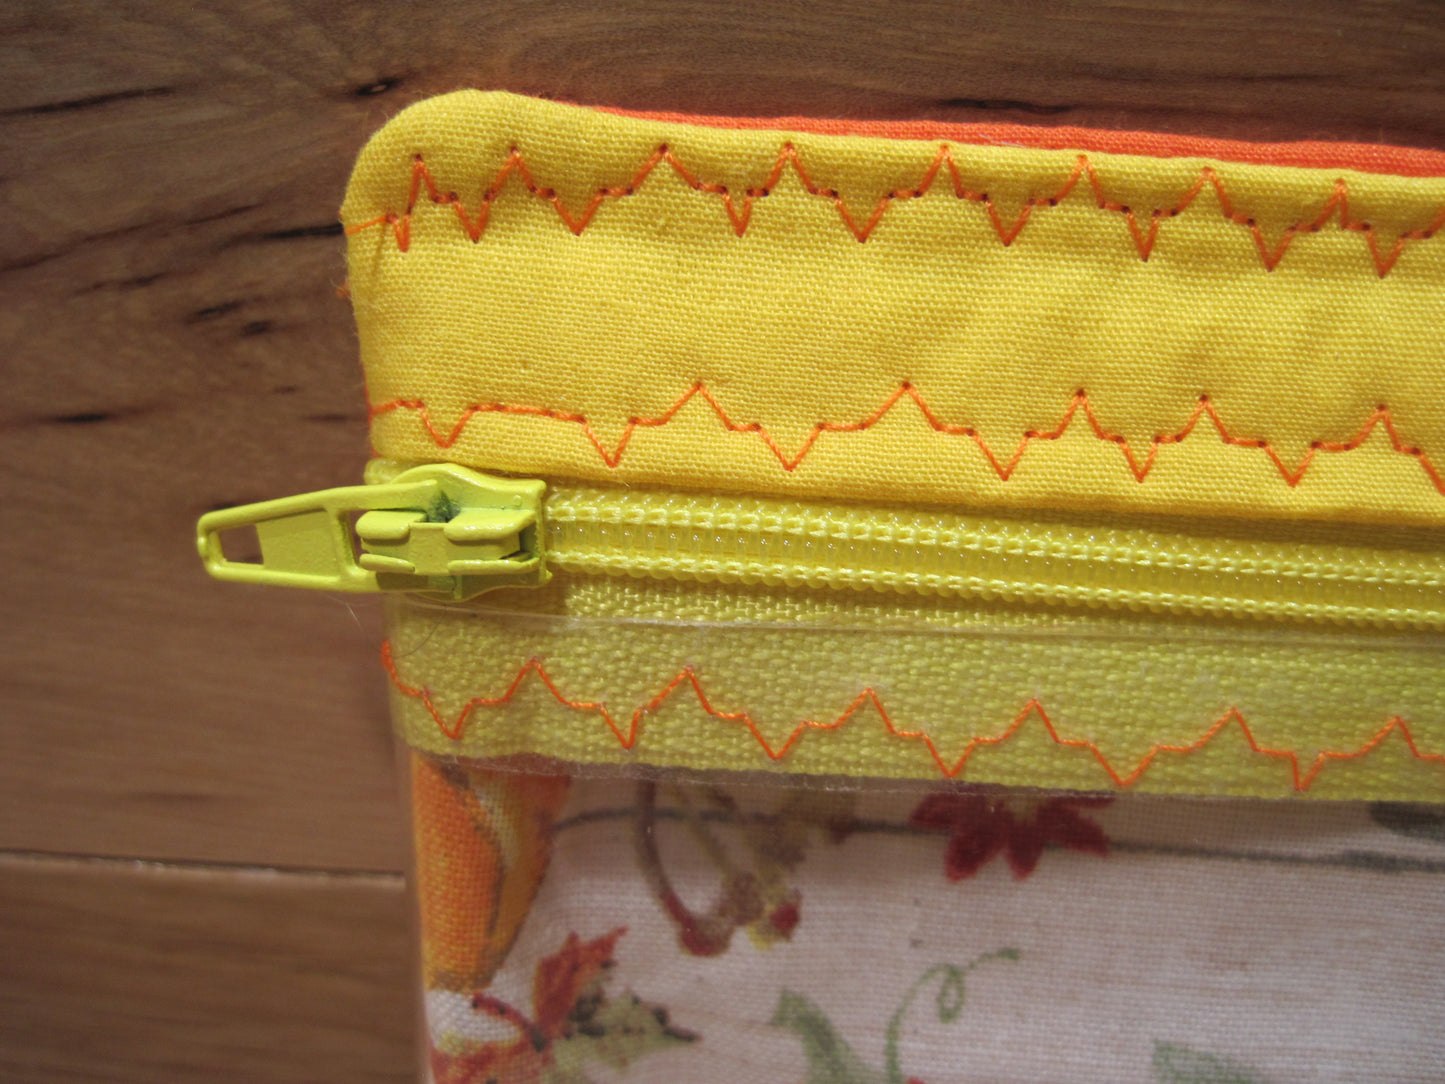 Notion's Bag ~ w/ red wagon & pumpkins, yellow & orange & zipper